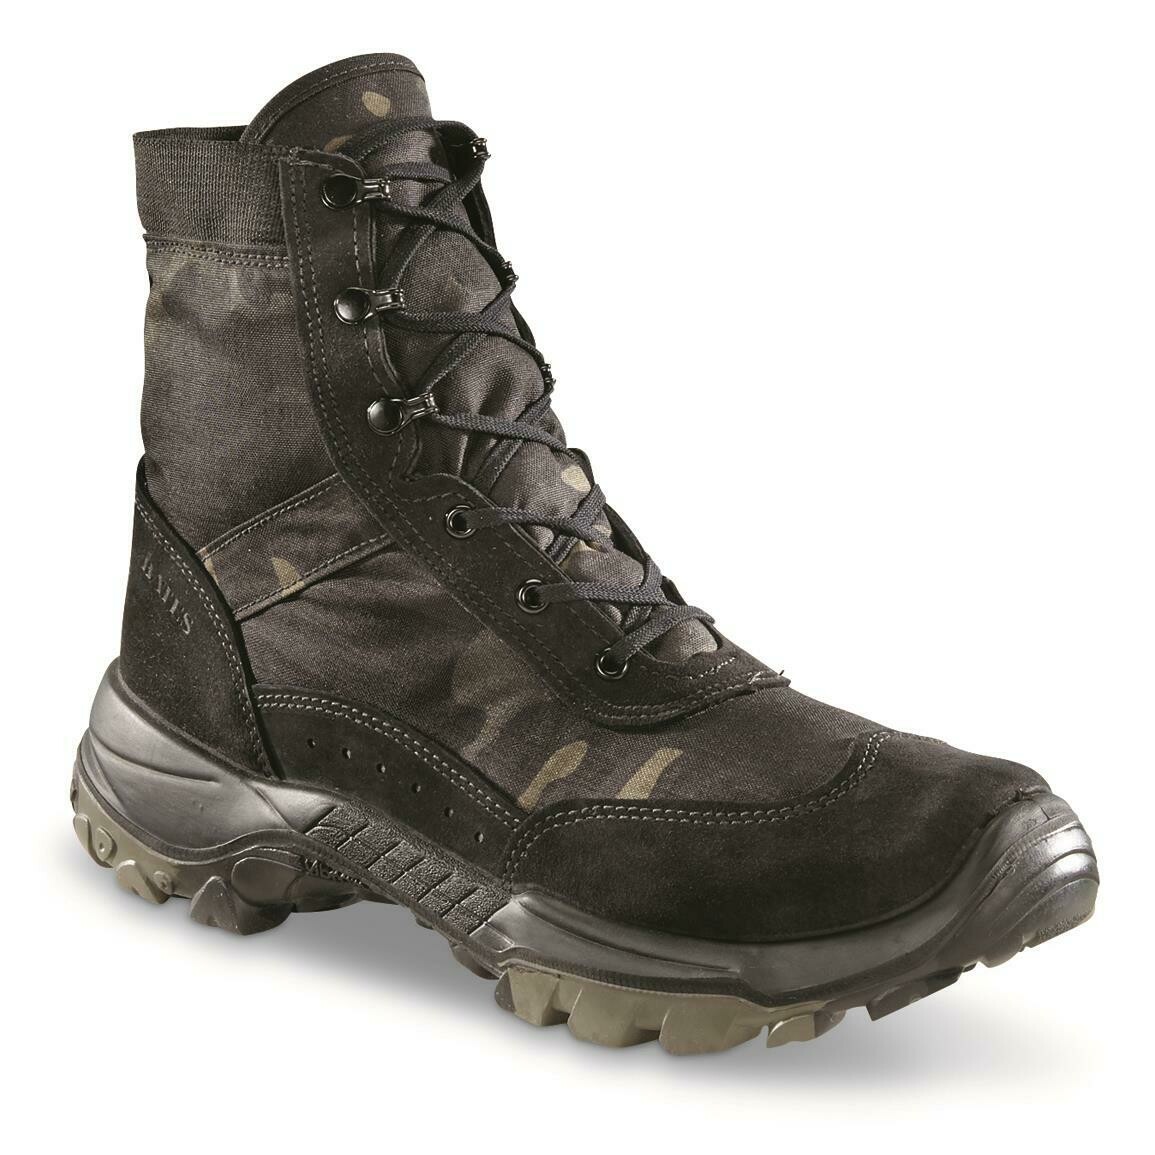 706181 (U.S. Military Surplus Bates Recondo Men's Duty Boots)